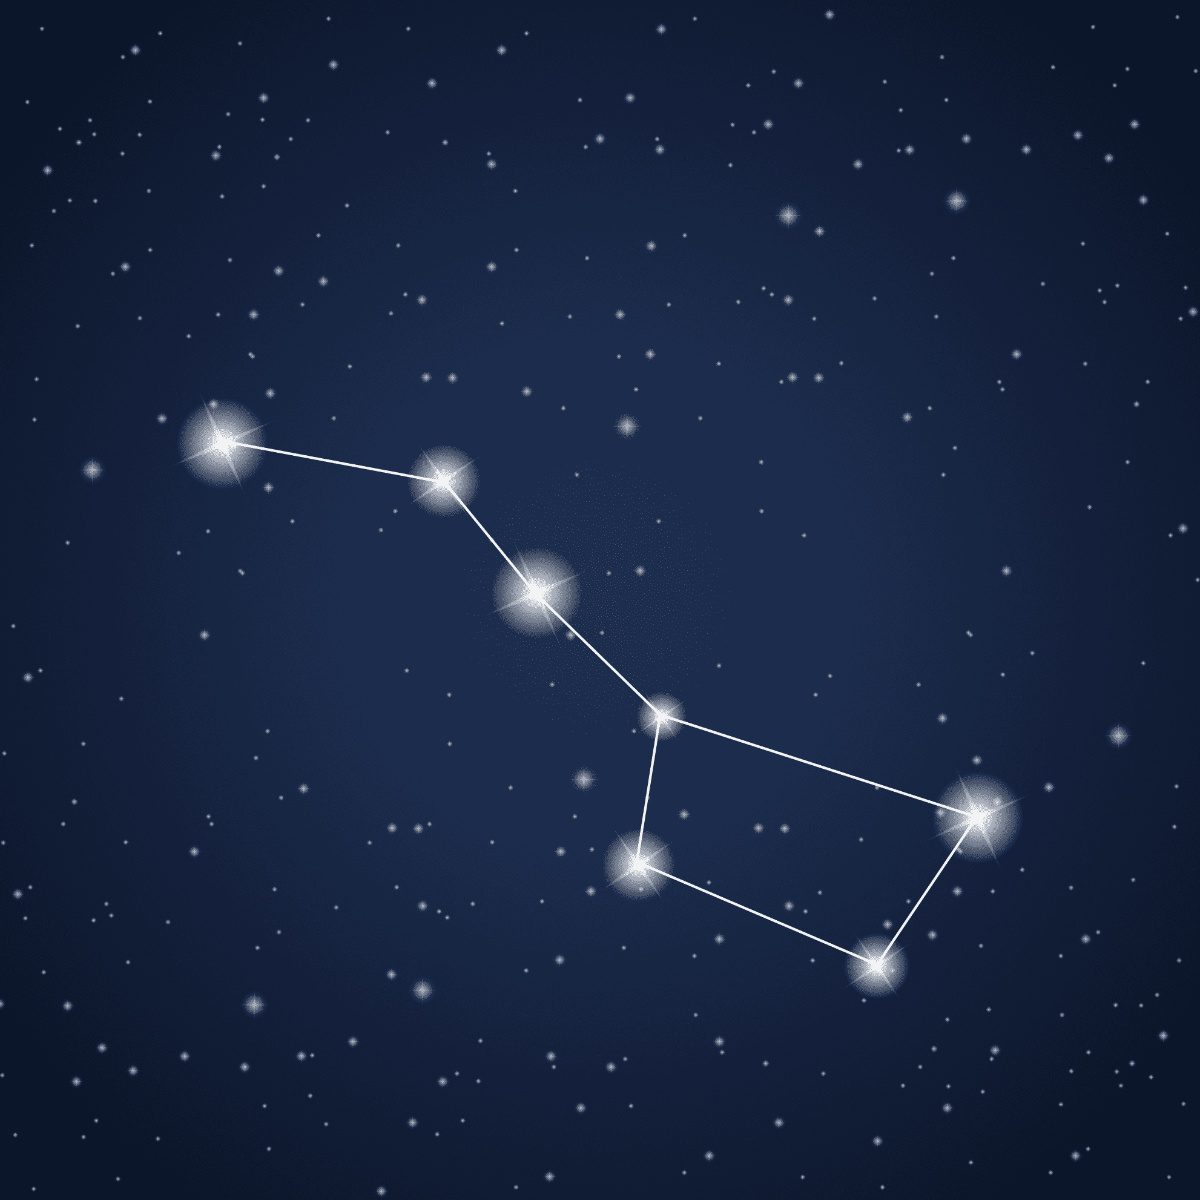 The Plough star constellation